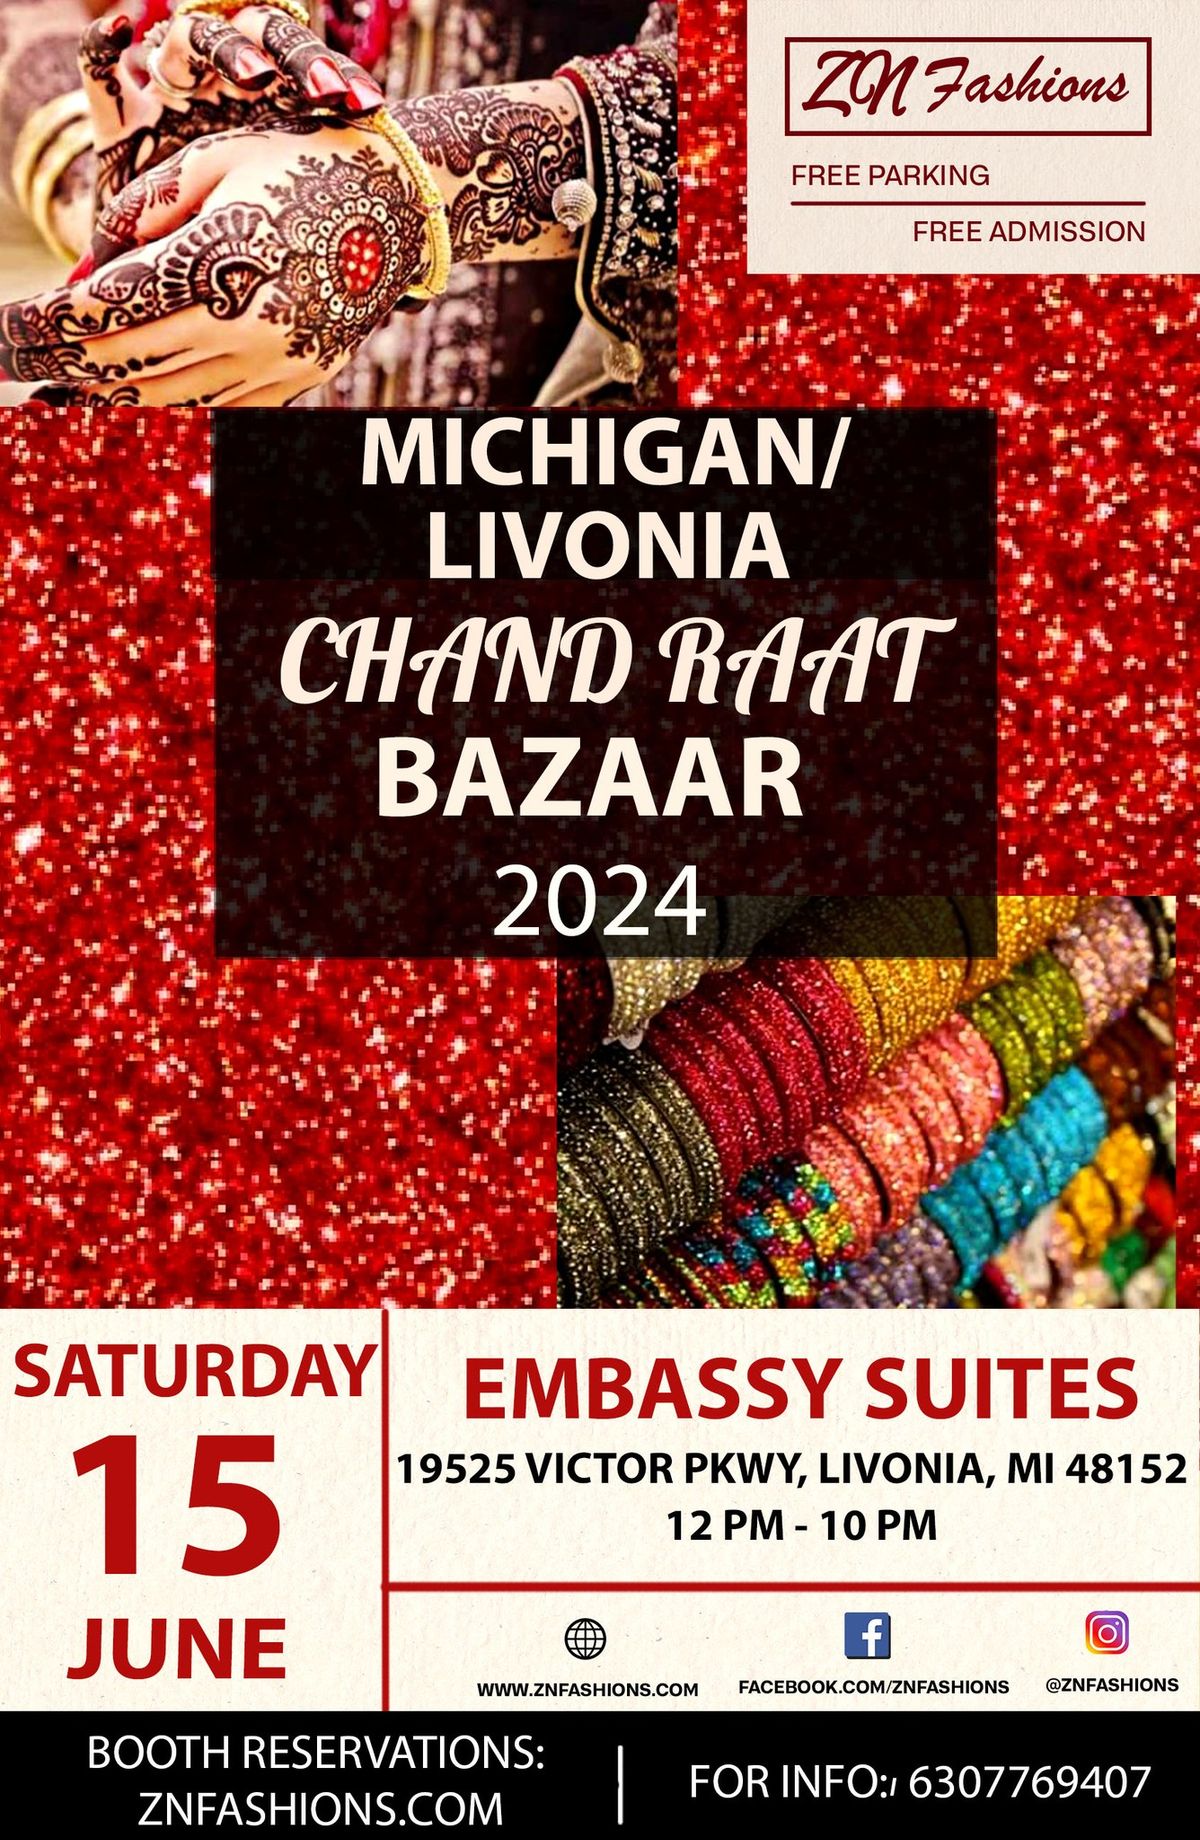 ZN Fashions Michigan\/Livonia Chand Raat Bazaar